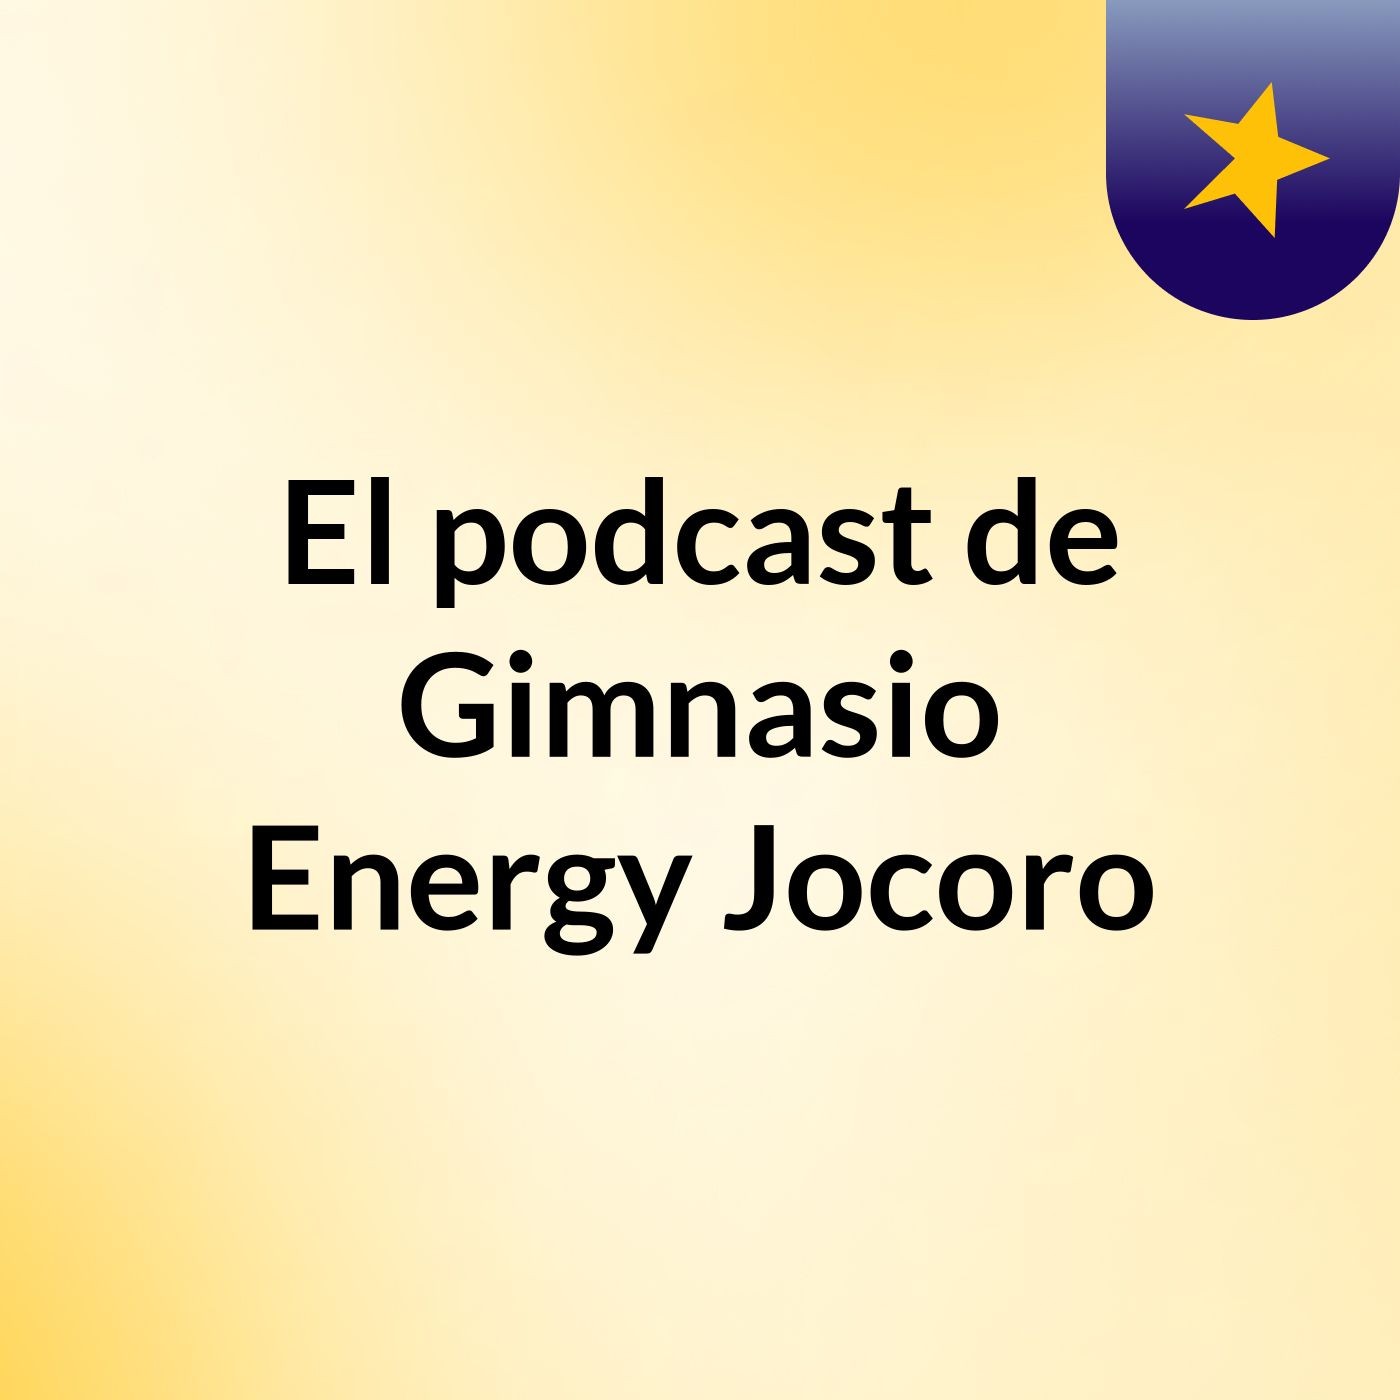 El podcast de Gimnasio Energy Jocoro